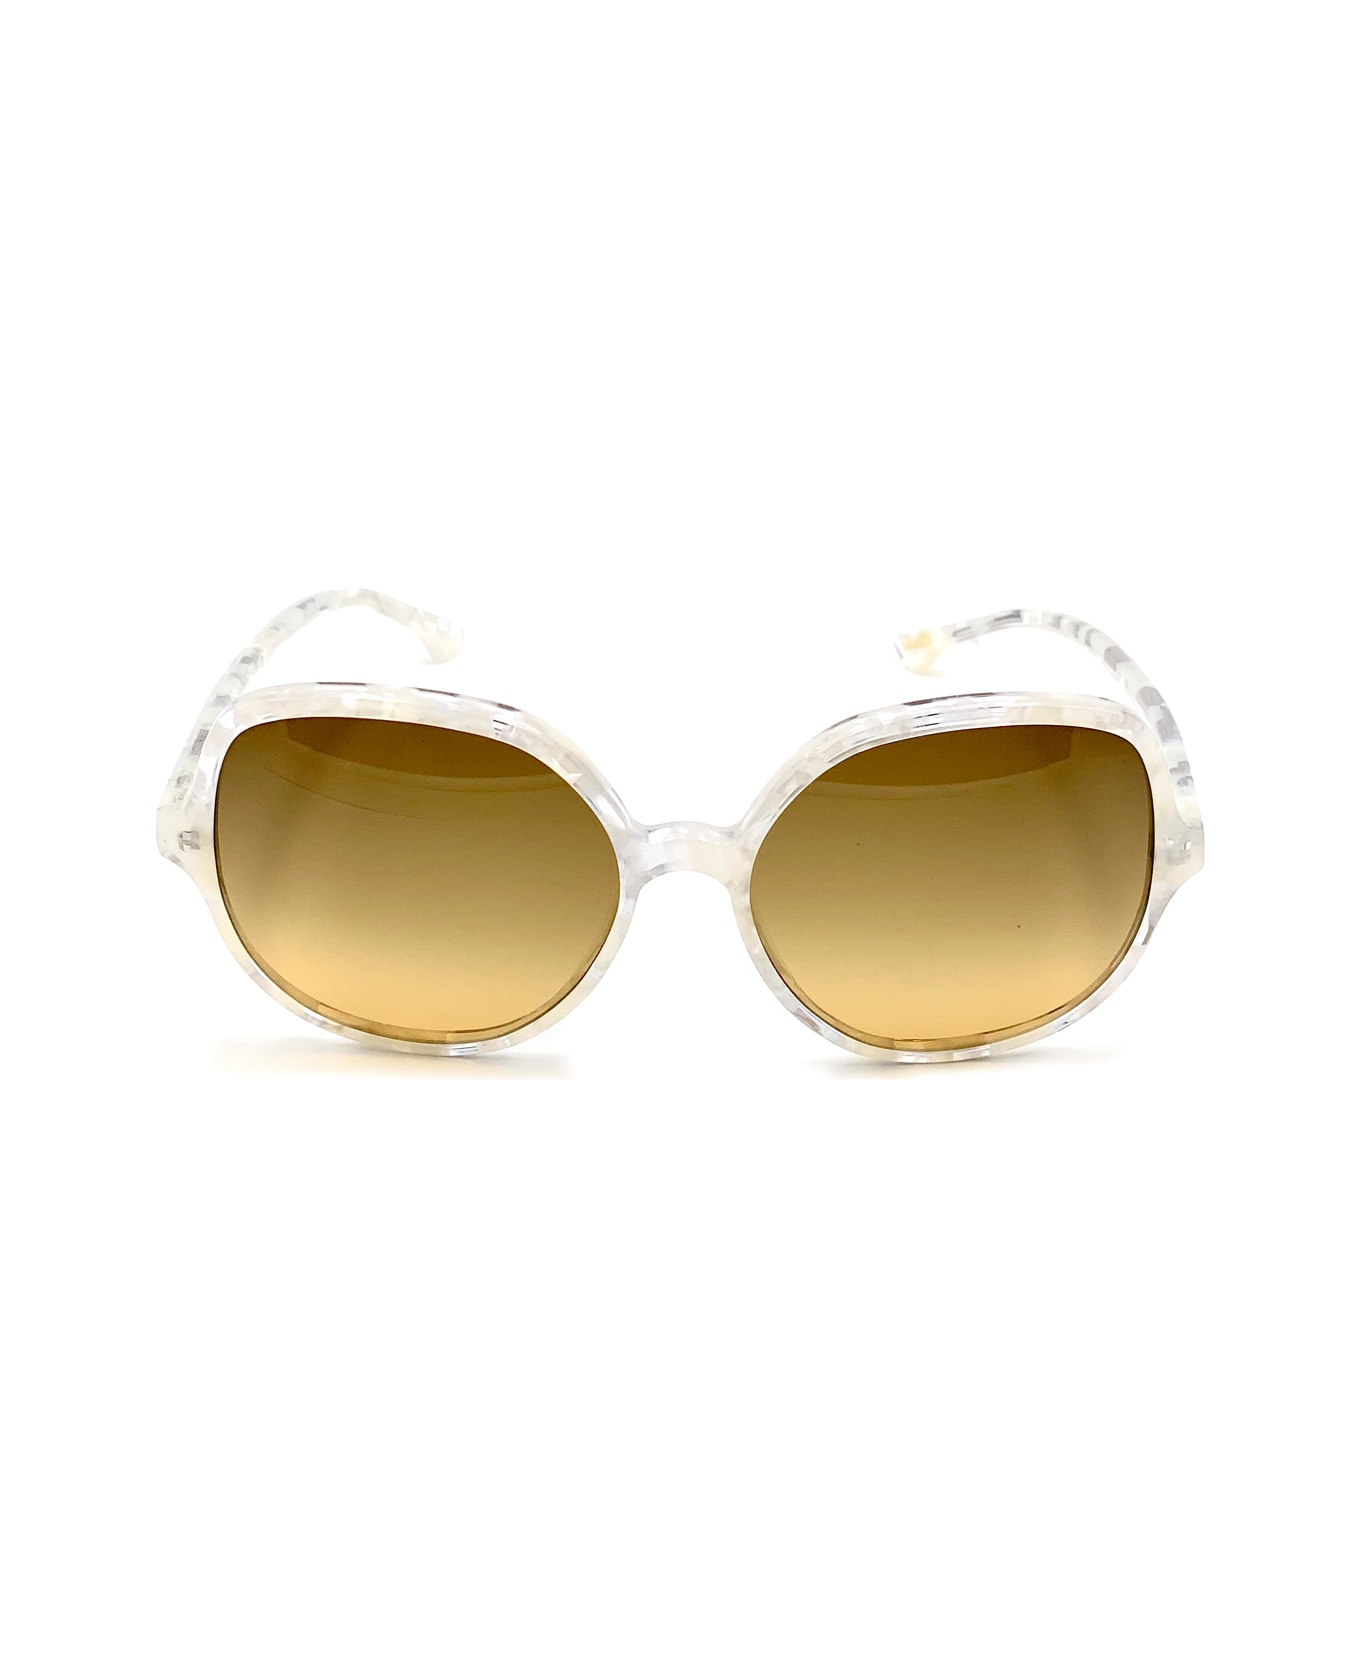 Silvian Heach Drag C661 Sunglasses - Avorio